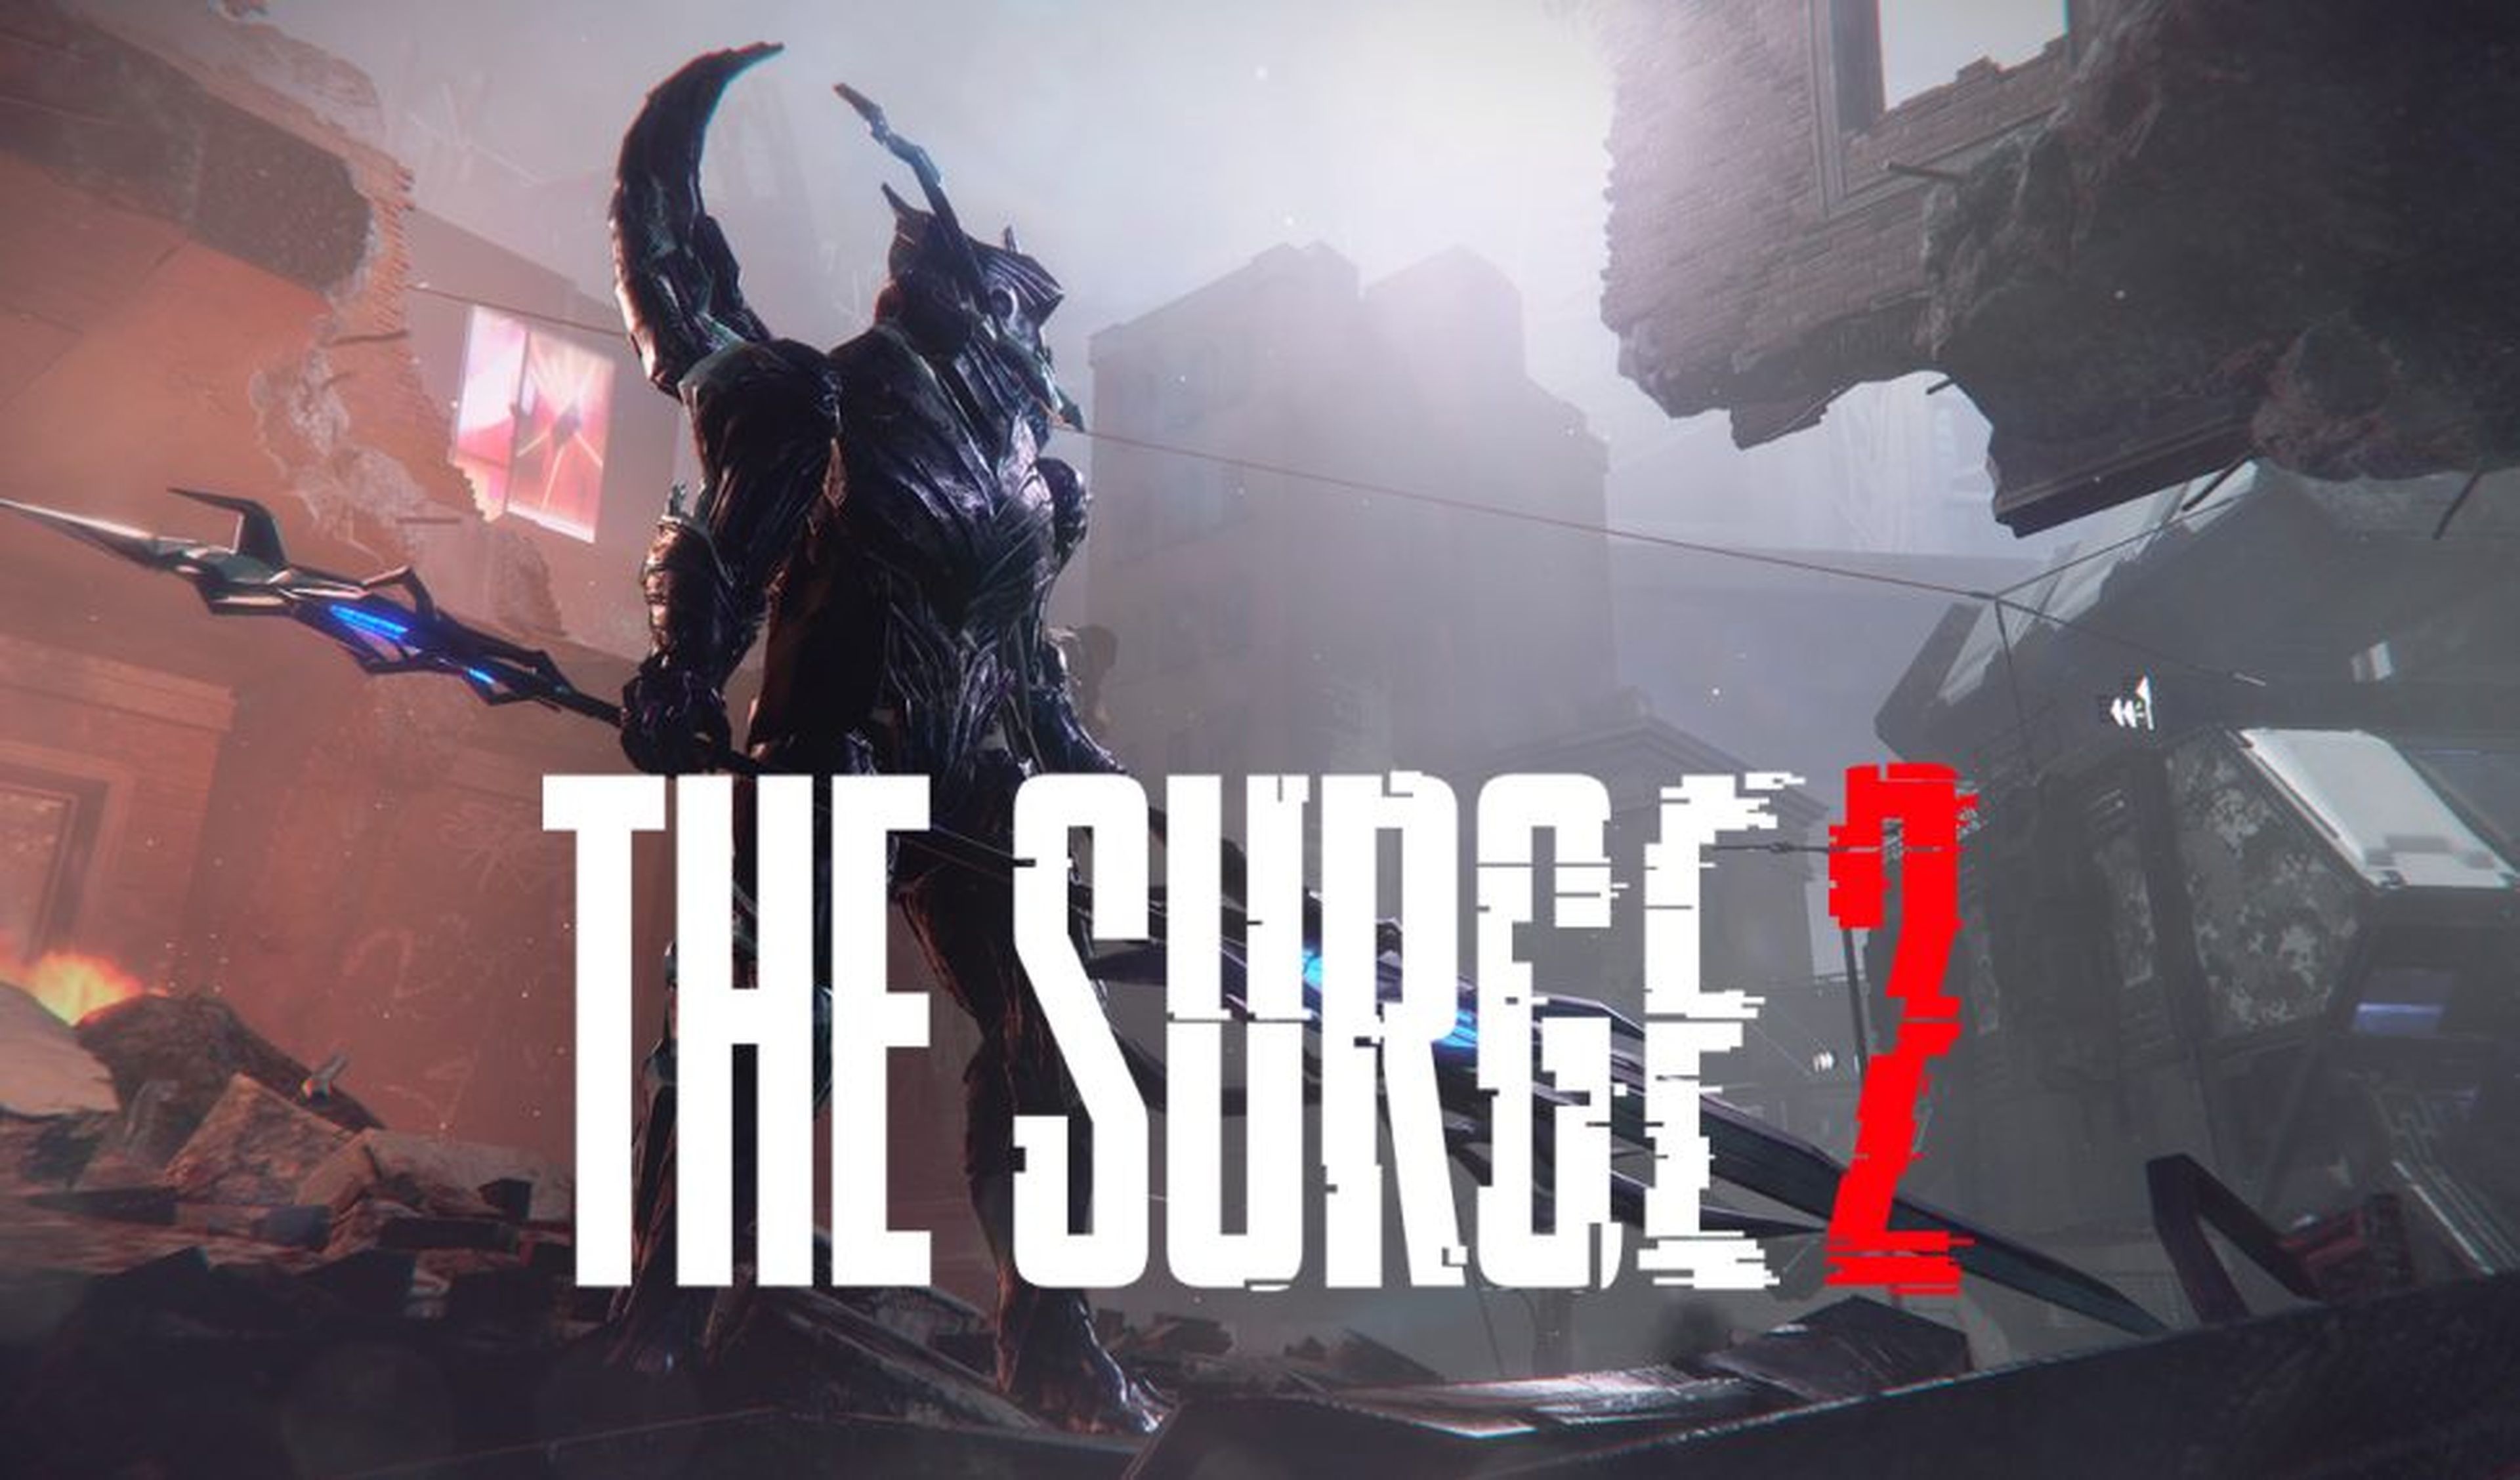 the surge 2